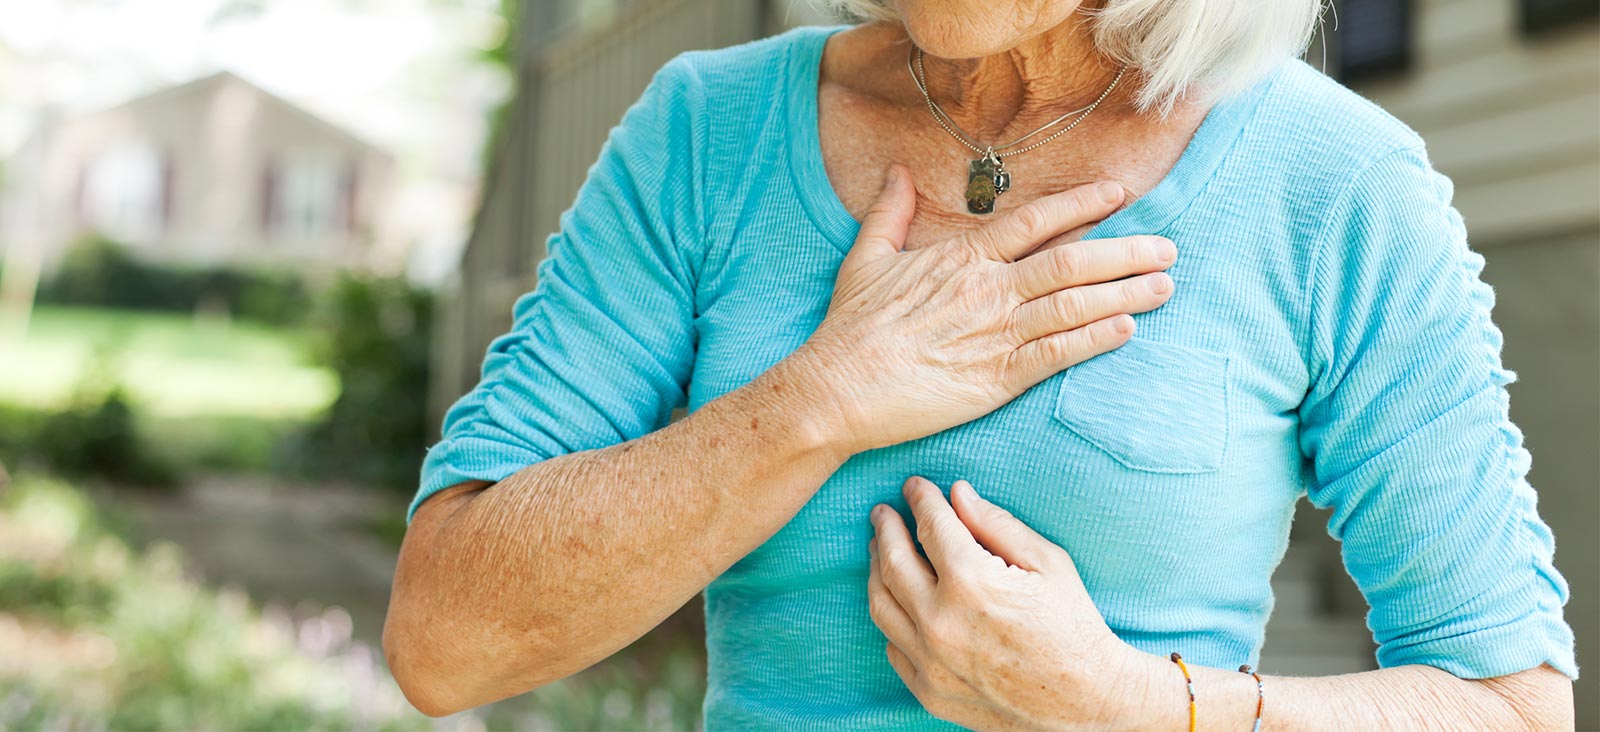 Tehnologia moderna poate revolutiona managementul bolii valvulare cardiace